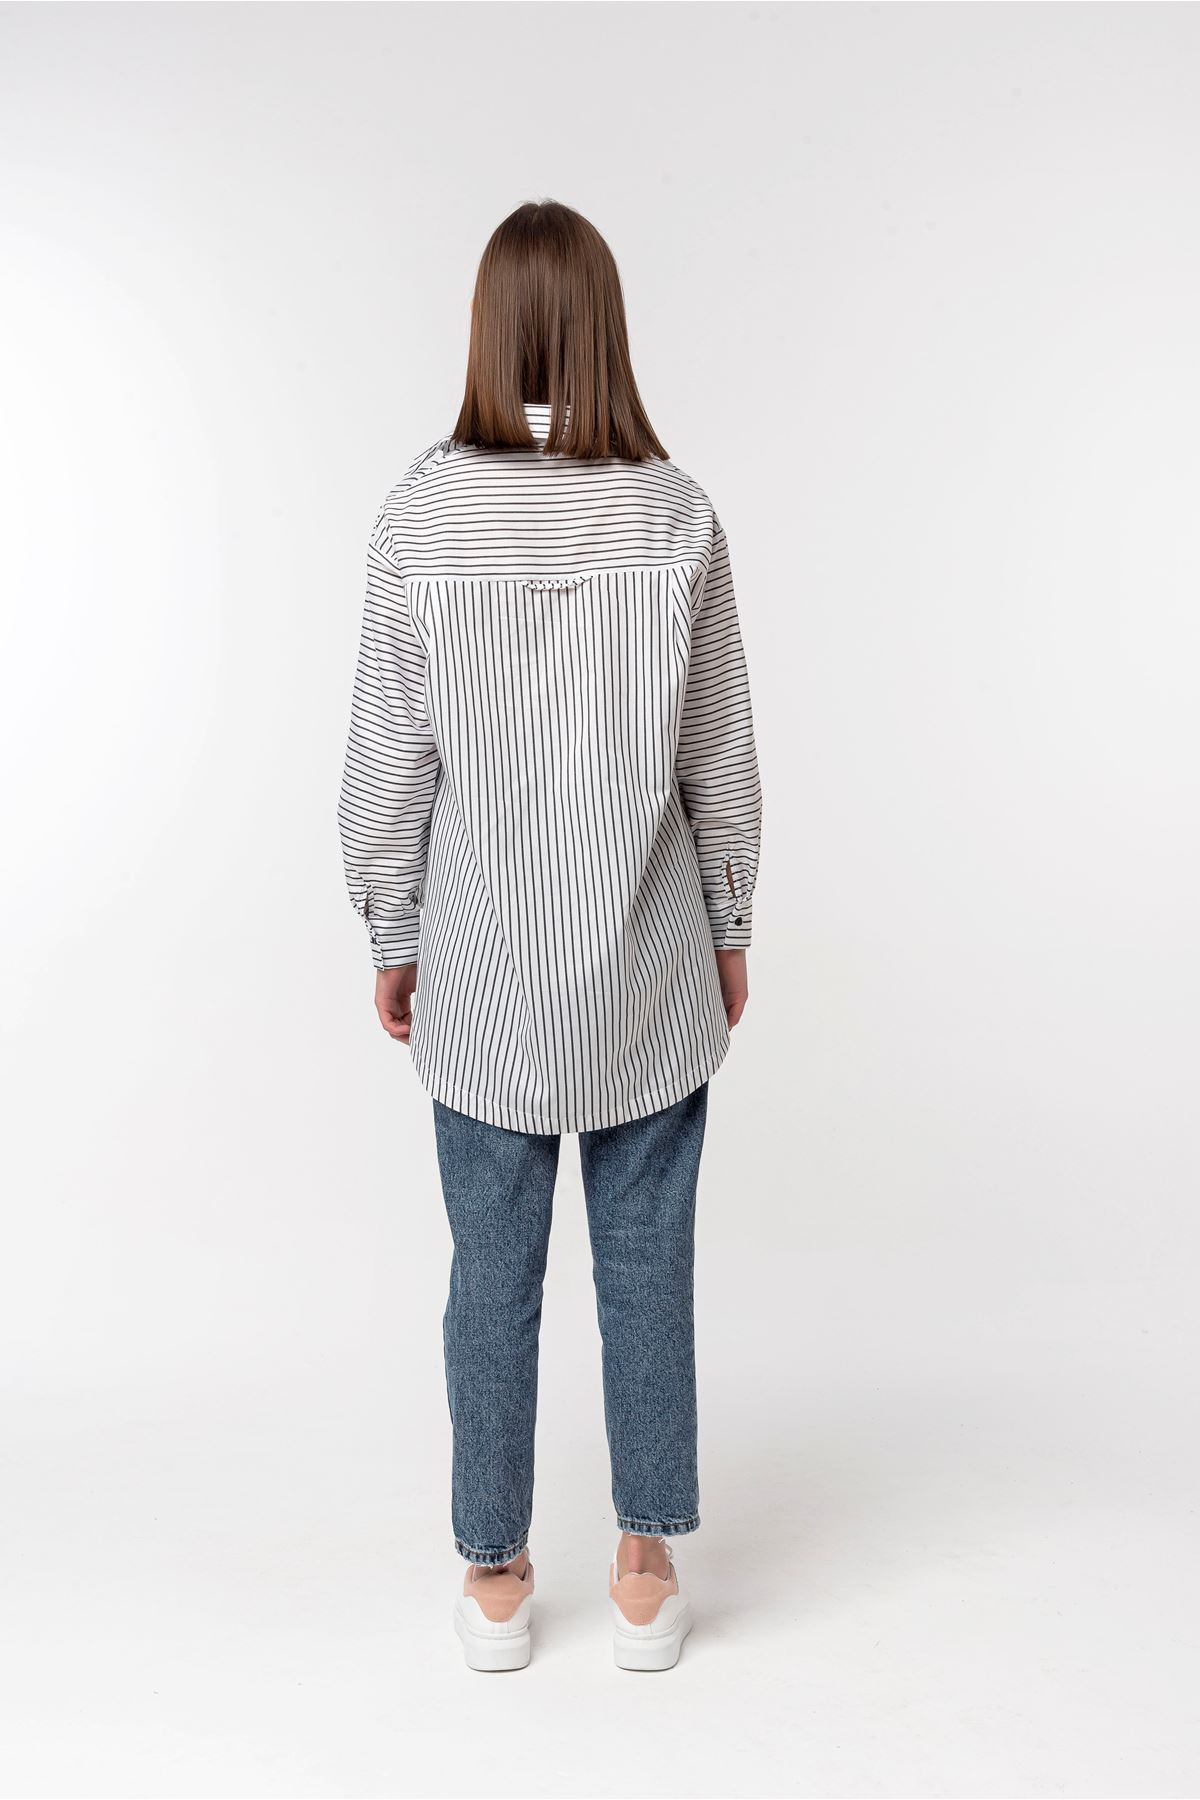 Satin Fabric Long Sleeve Oversize Striped Women'S Shirt - Black